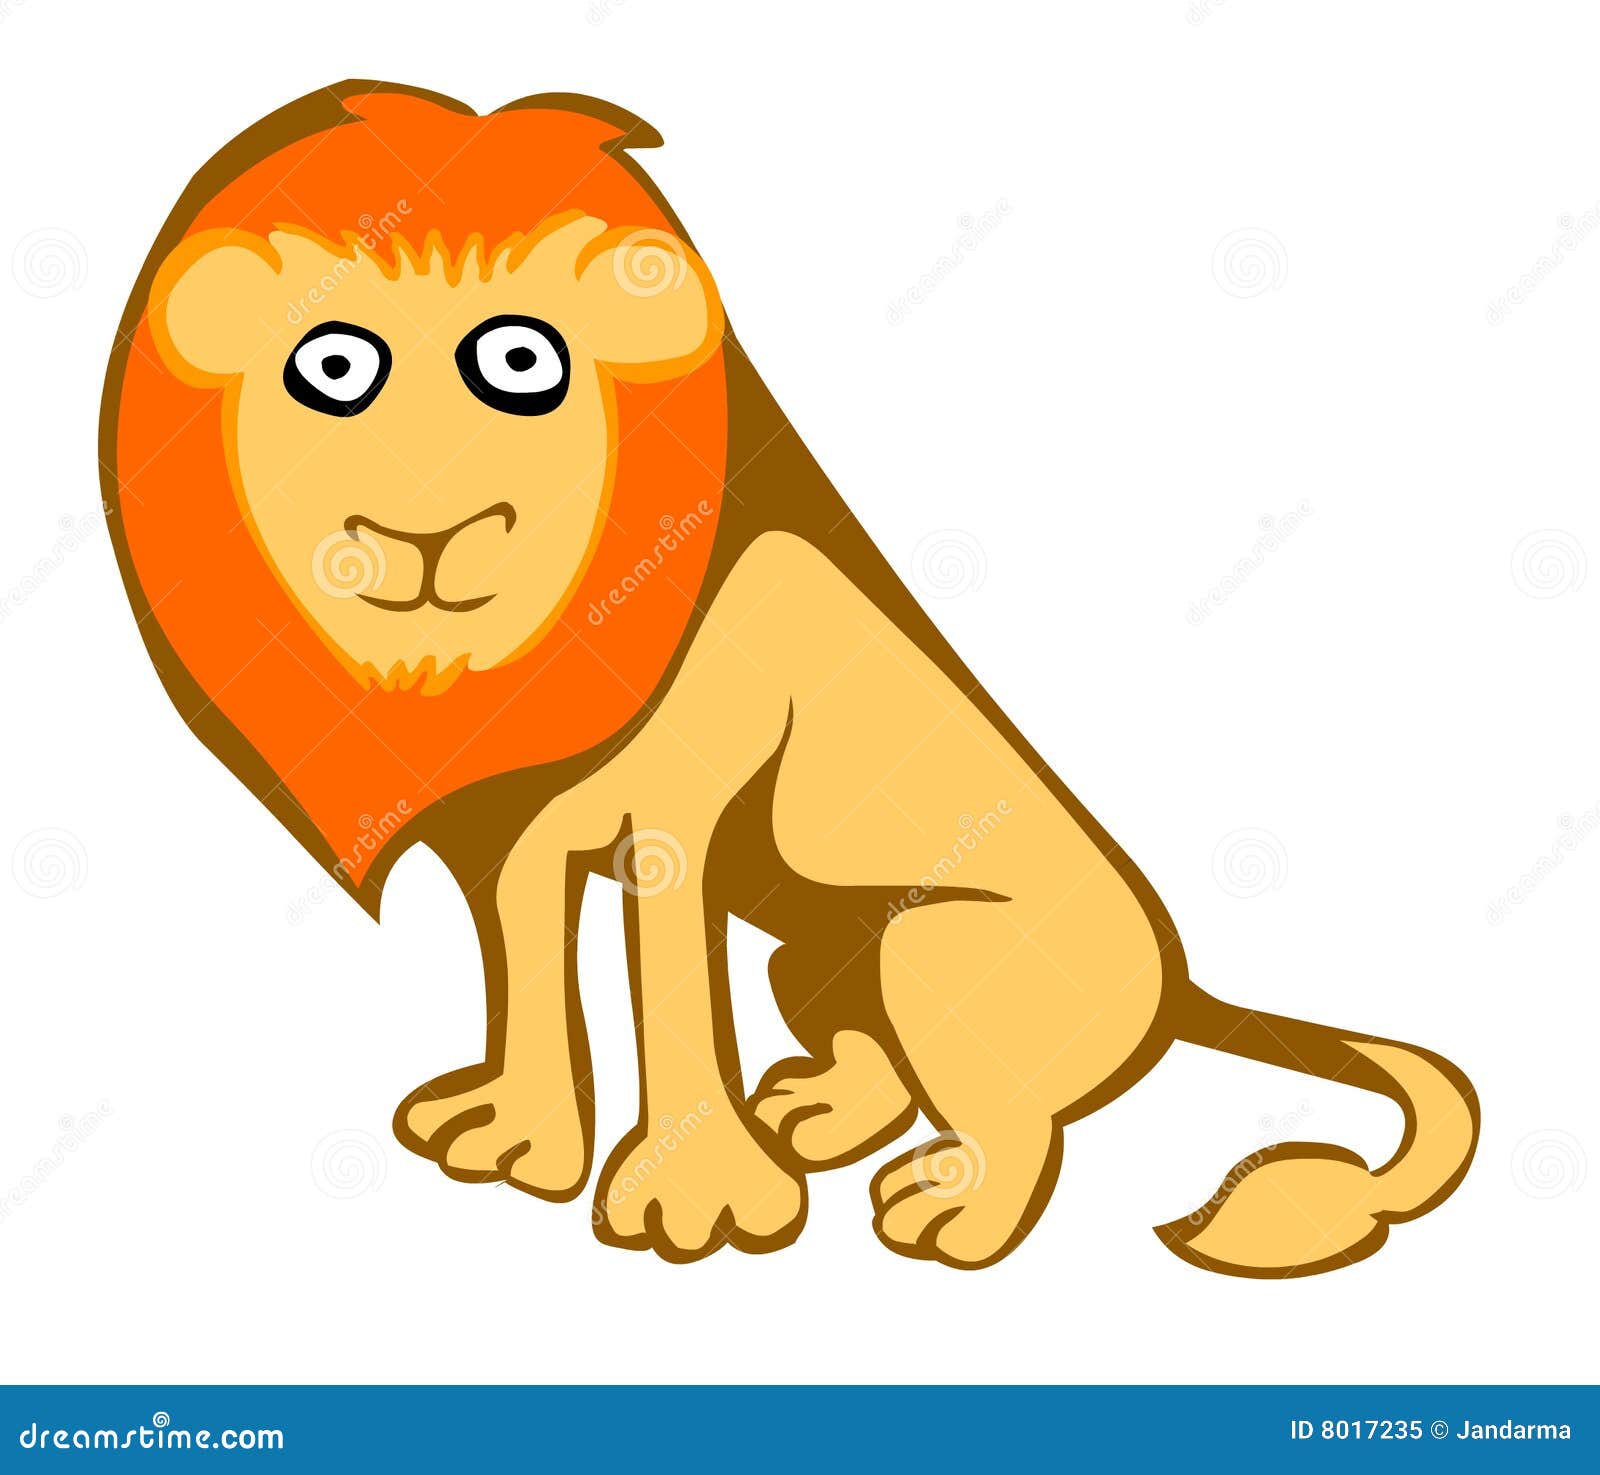 Lion stock illustration. Illustration of cute, suprised - 8017235